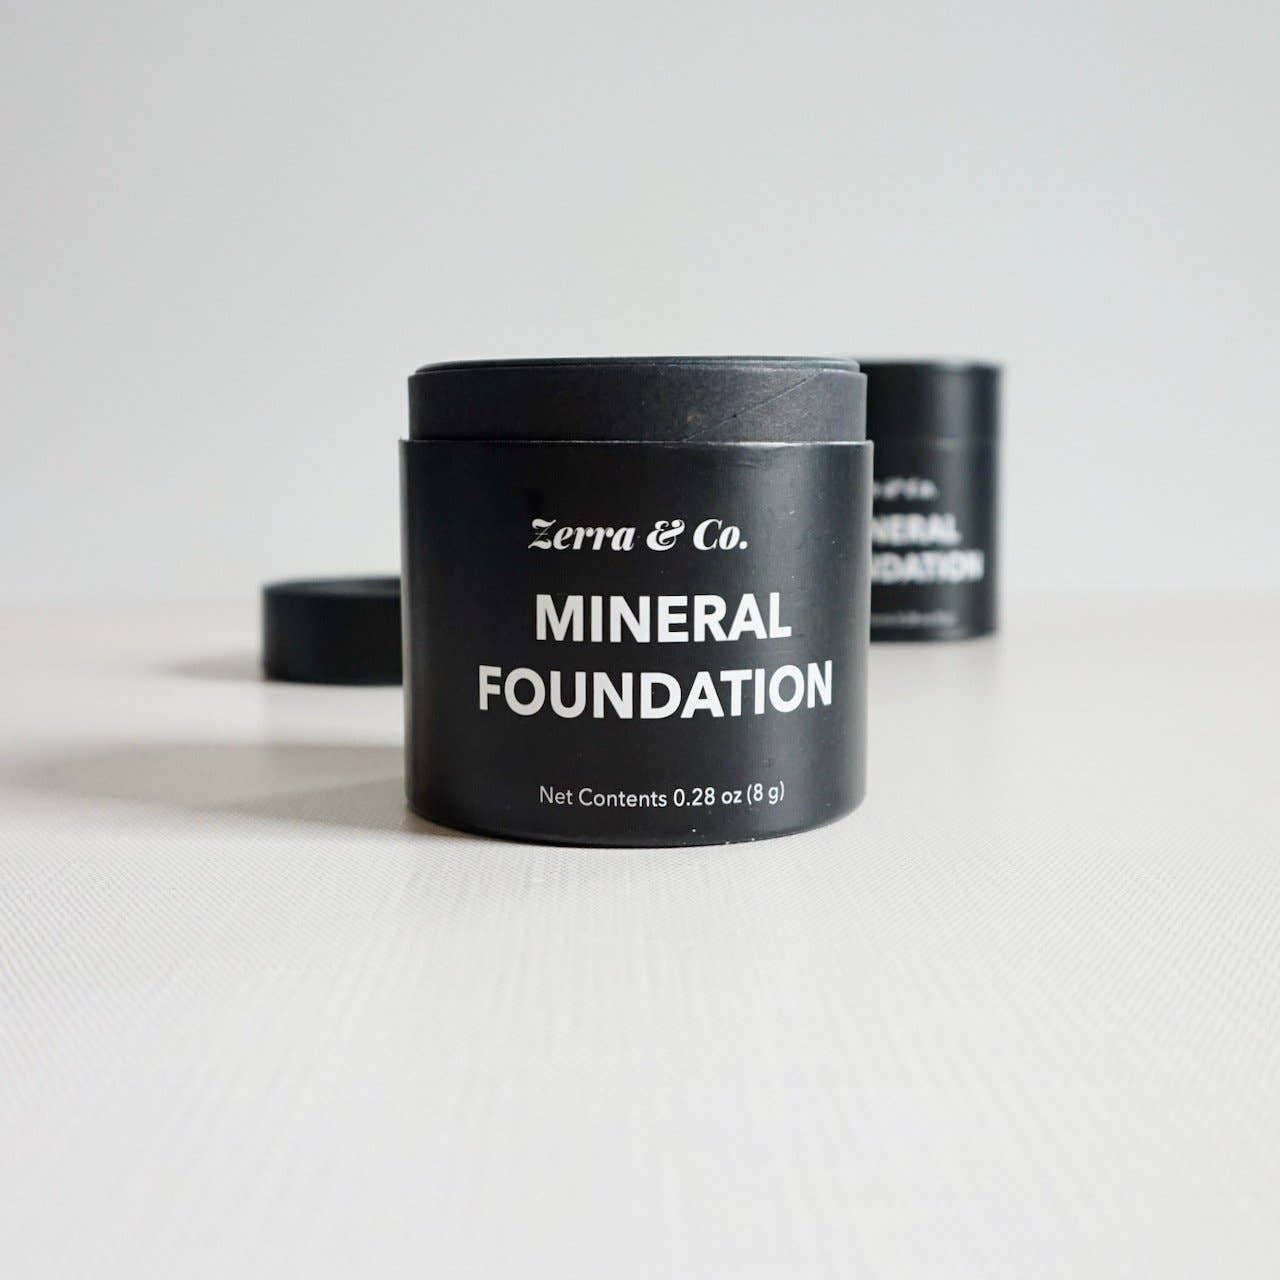 Mineral Foundation - Carmel Zerra & Co.